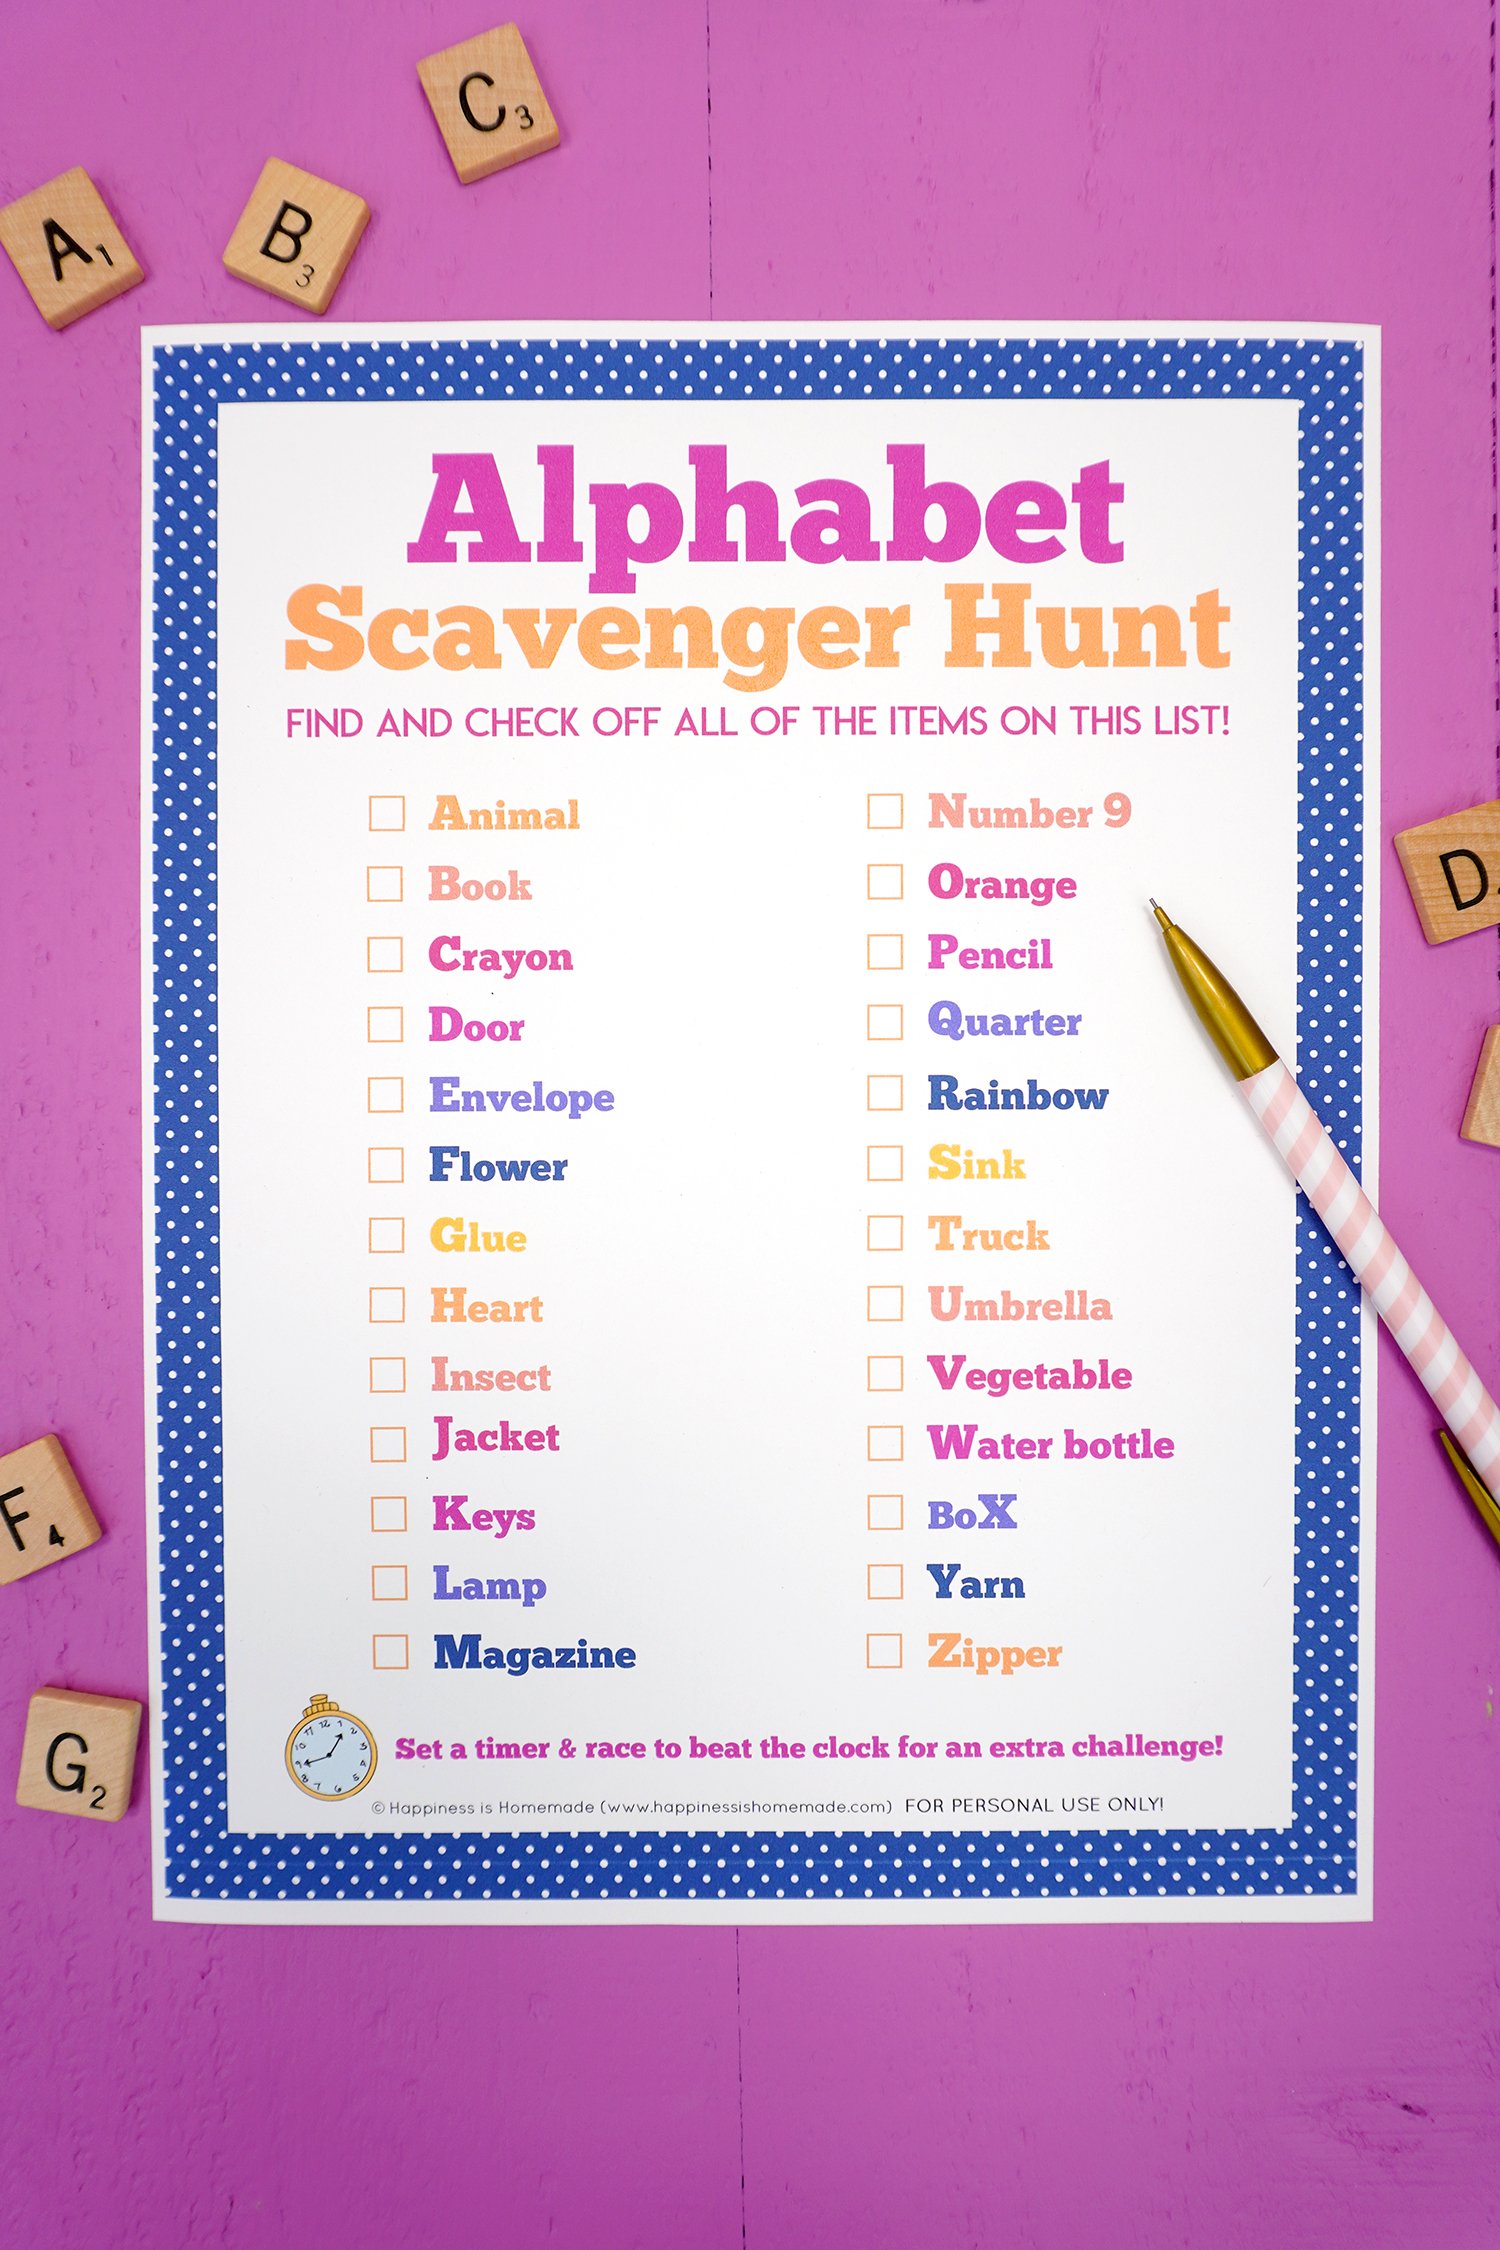 Alphabet scavenger hunt printable on purple background with pink pencil and ABC alphabet Scrabble tiles